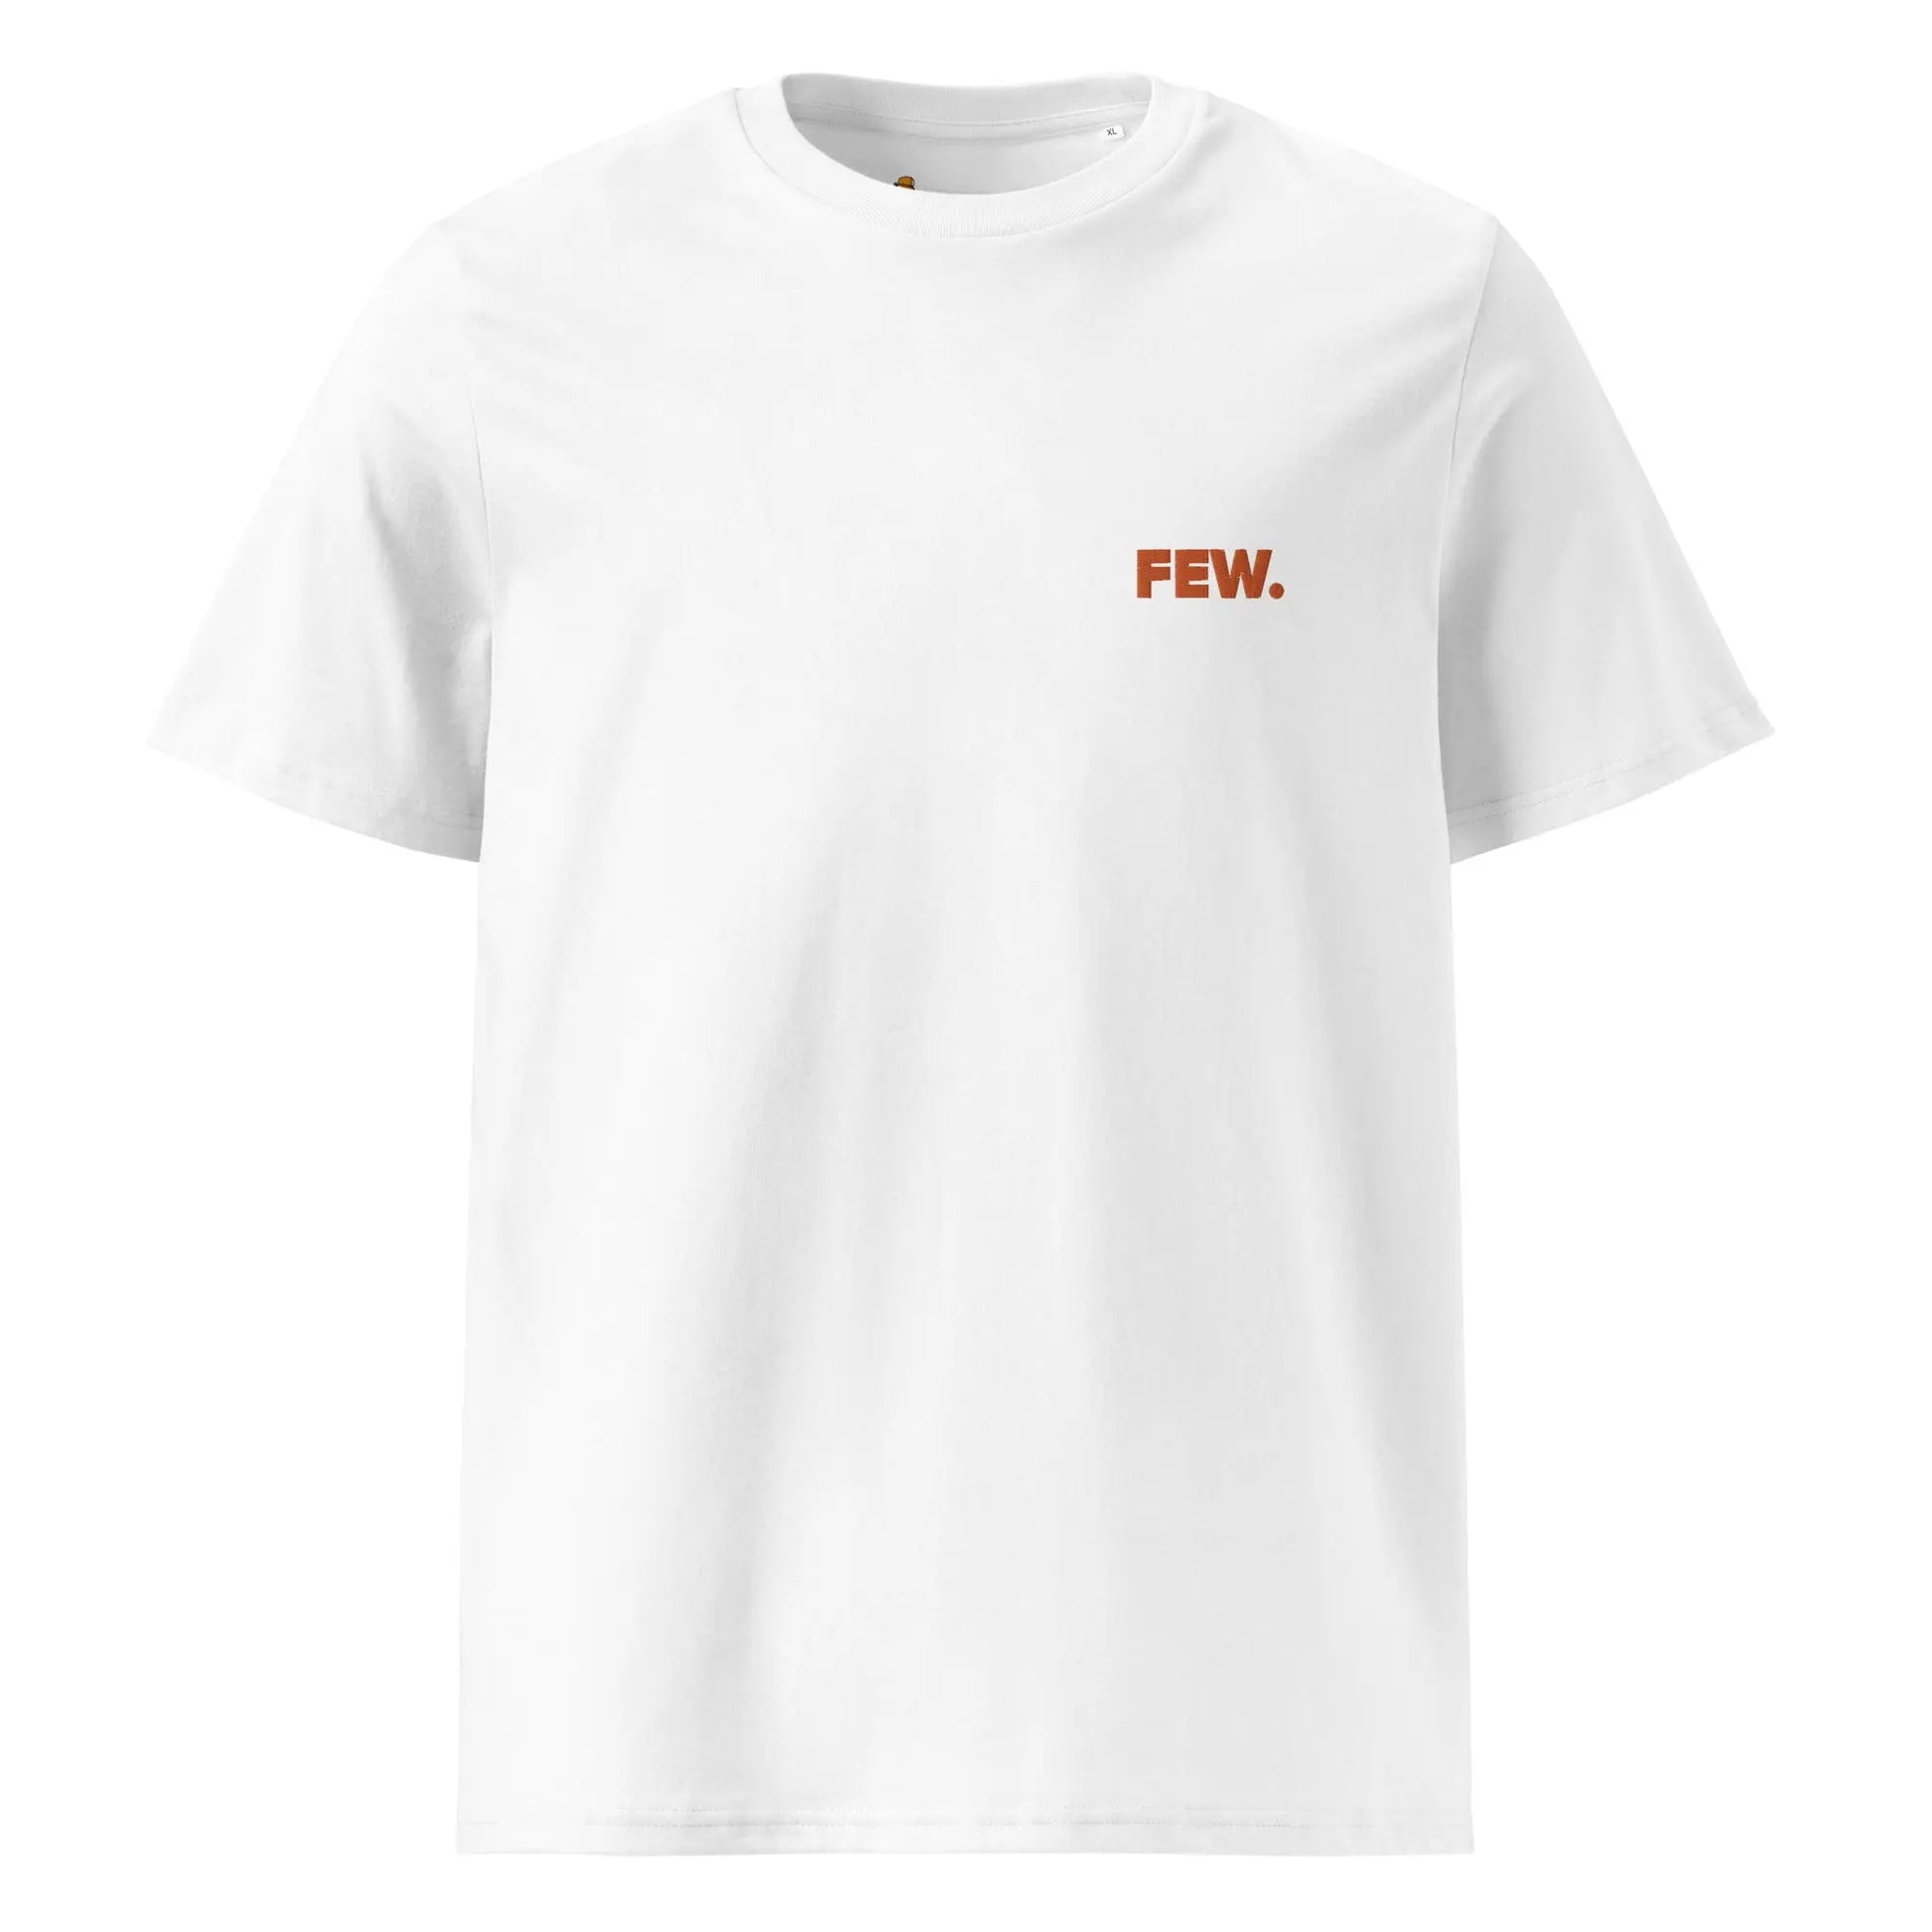 FEW Bitcoin T-shirt - Orange Embroidered - Premium - Unisex - Organic Cotton Store of Value